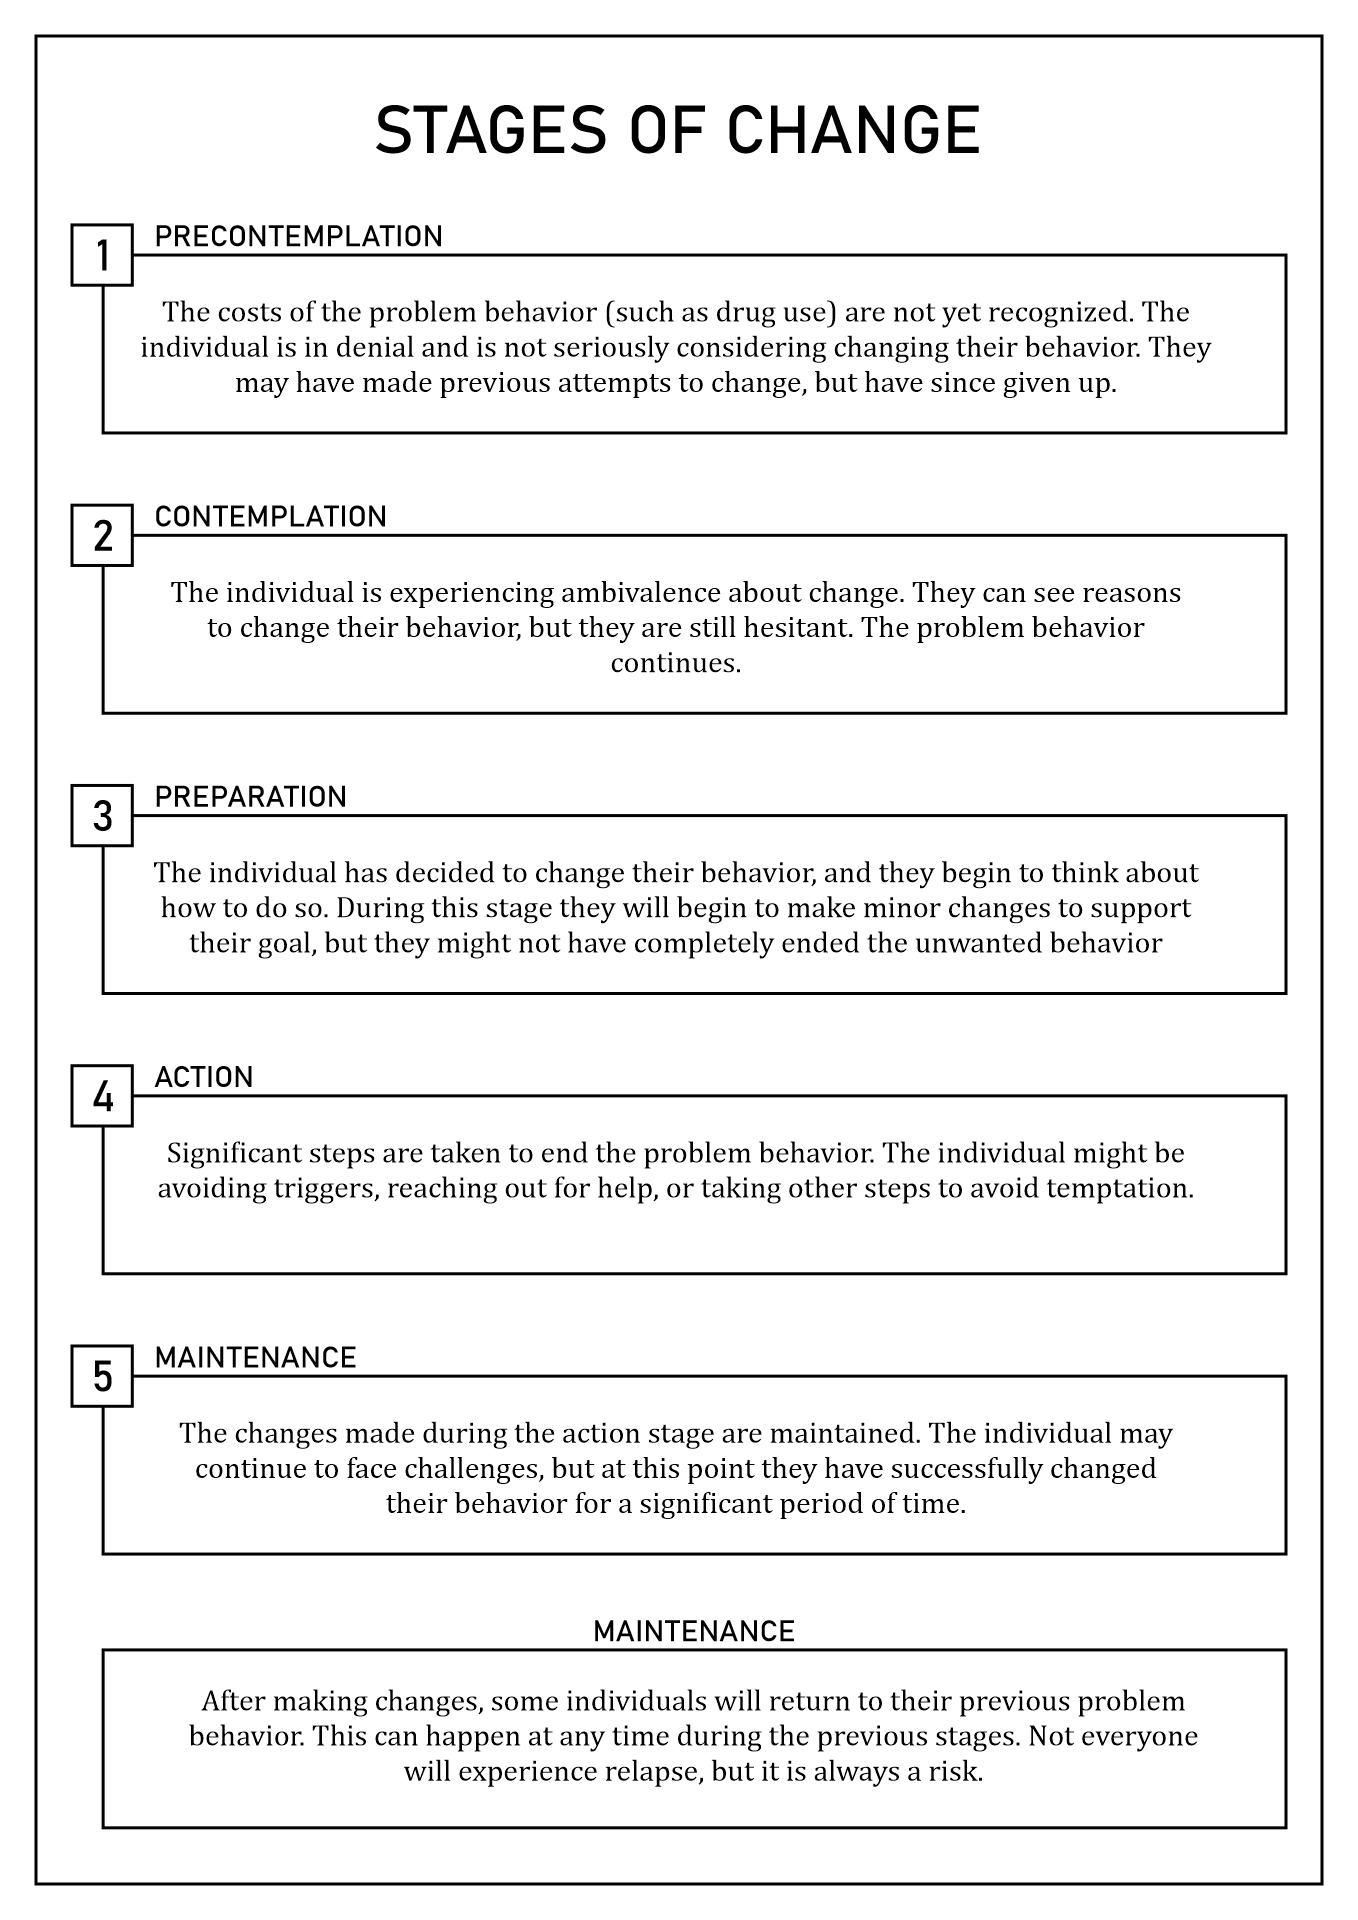 Stages of Change Worksheet Addiction